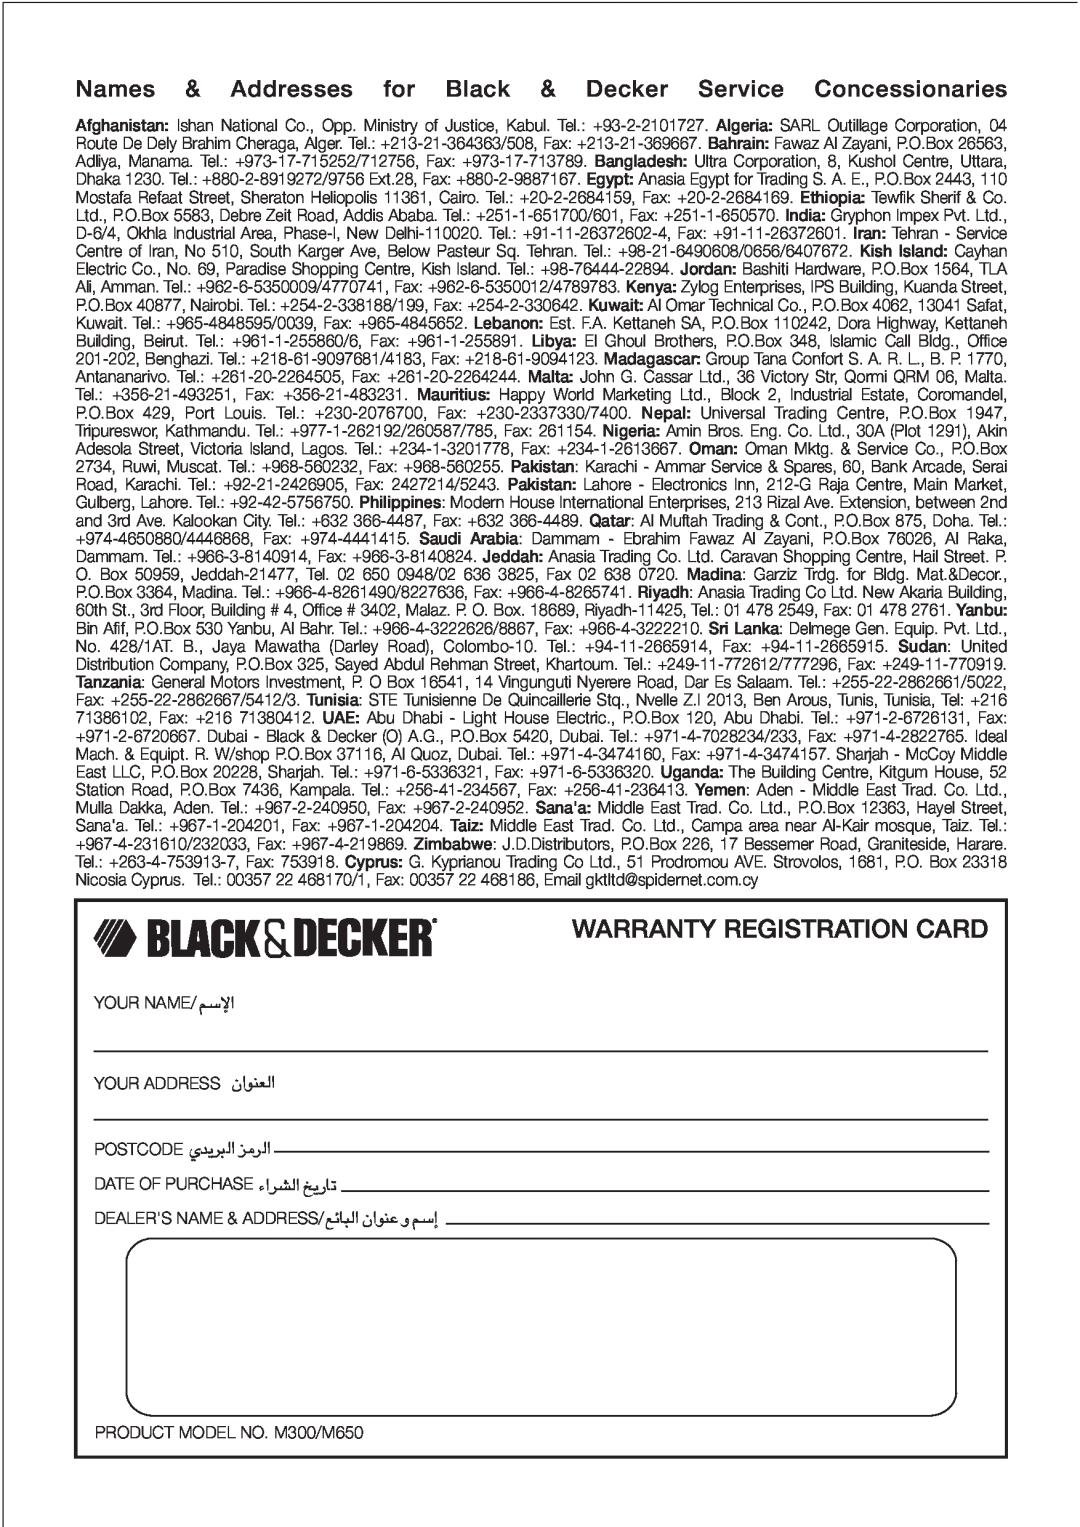 Black & Decker M300 manual Warranty Registration Card, Names & Addresses for Black & Decker Service Concessionaries 